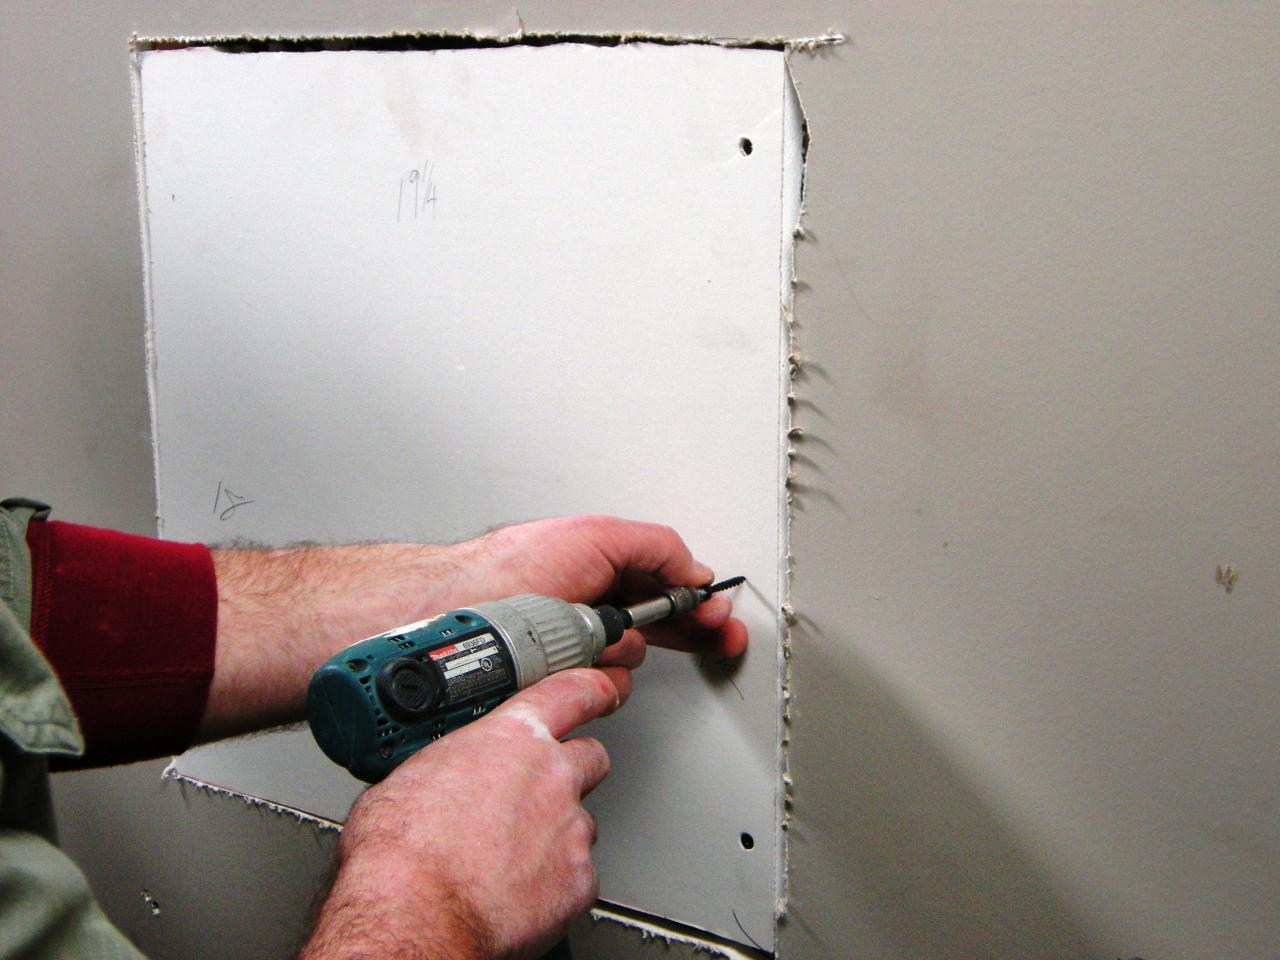 drywall repair patching holes cracks hole sink diy tape pedestal painting ultimate joint sheetrock patch repairs repairing walls ceiling removal